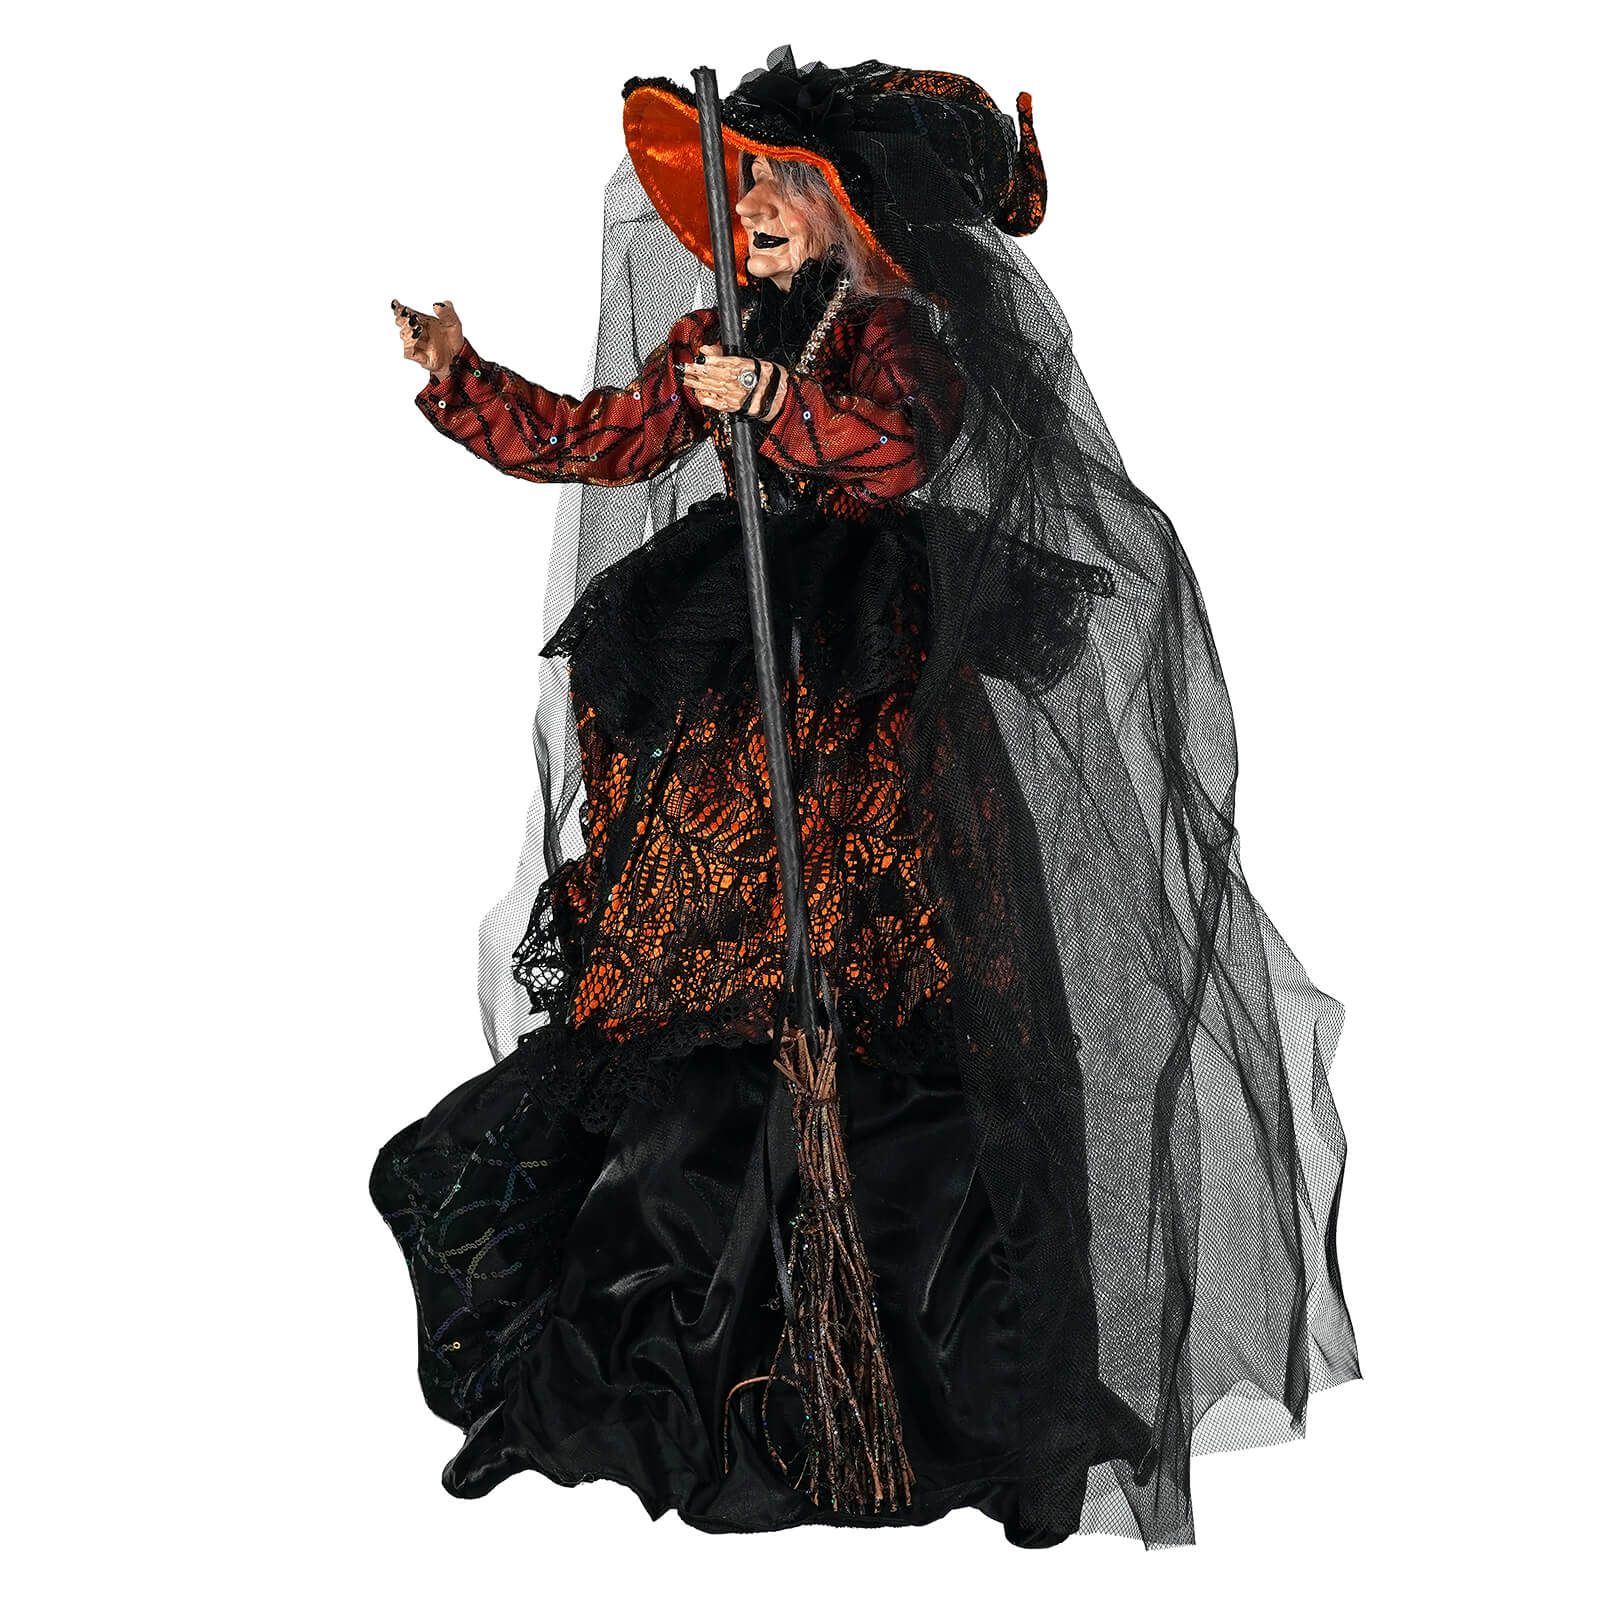 Black & Orange Dressed Witch Holding Broom